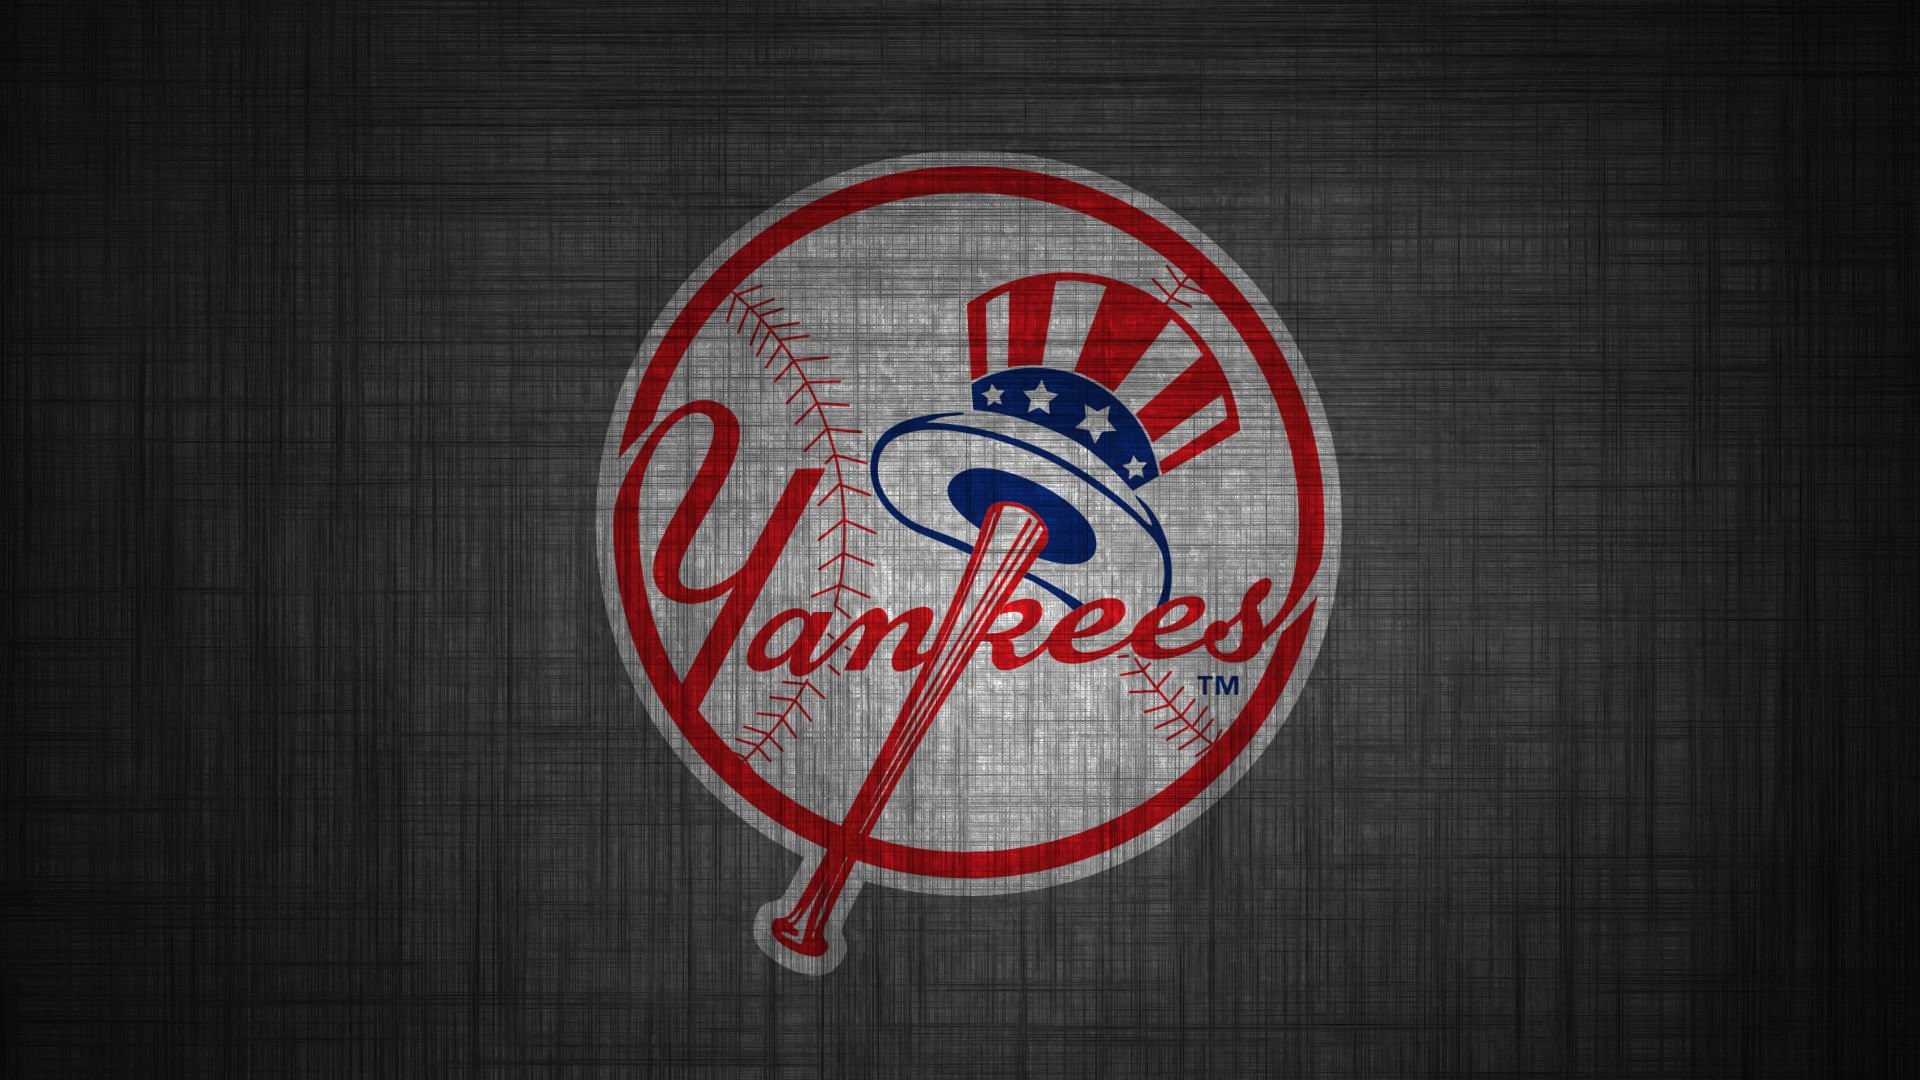 New York Yankees Logo Wallpaper HD Wallpapers Download Free Images Wallpaper [wallpaper981.blogspot.com]